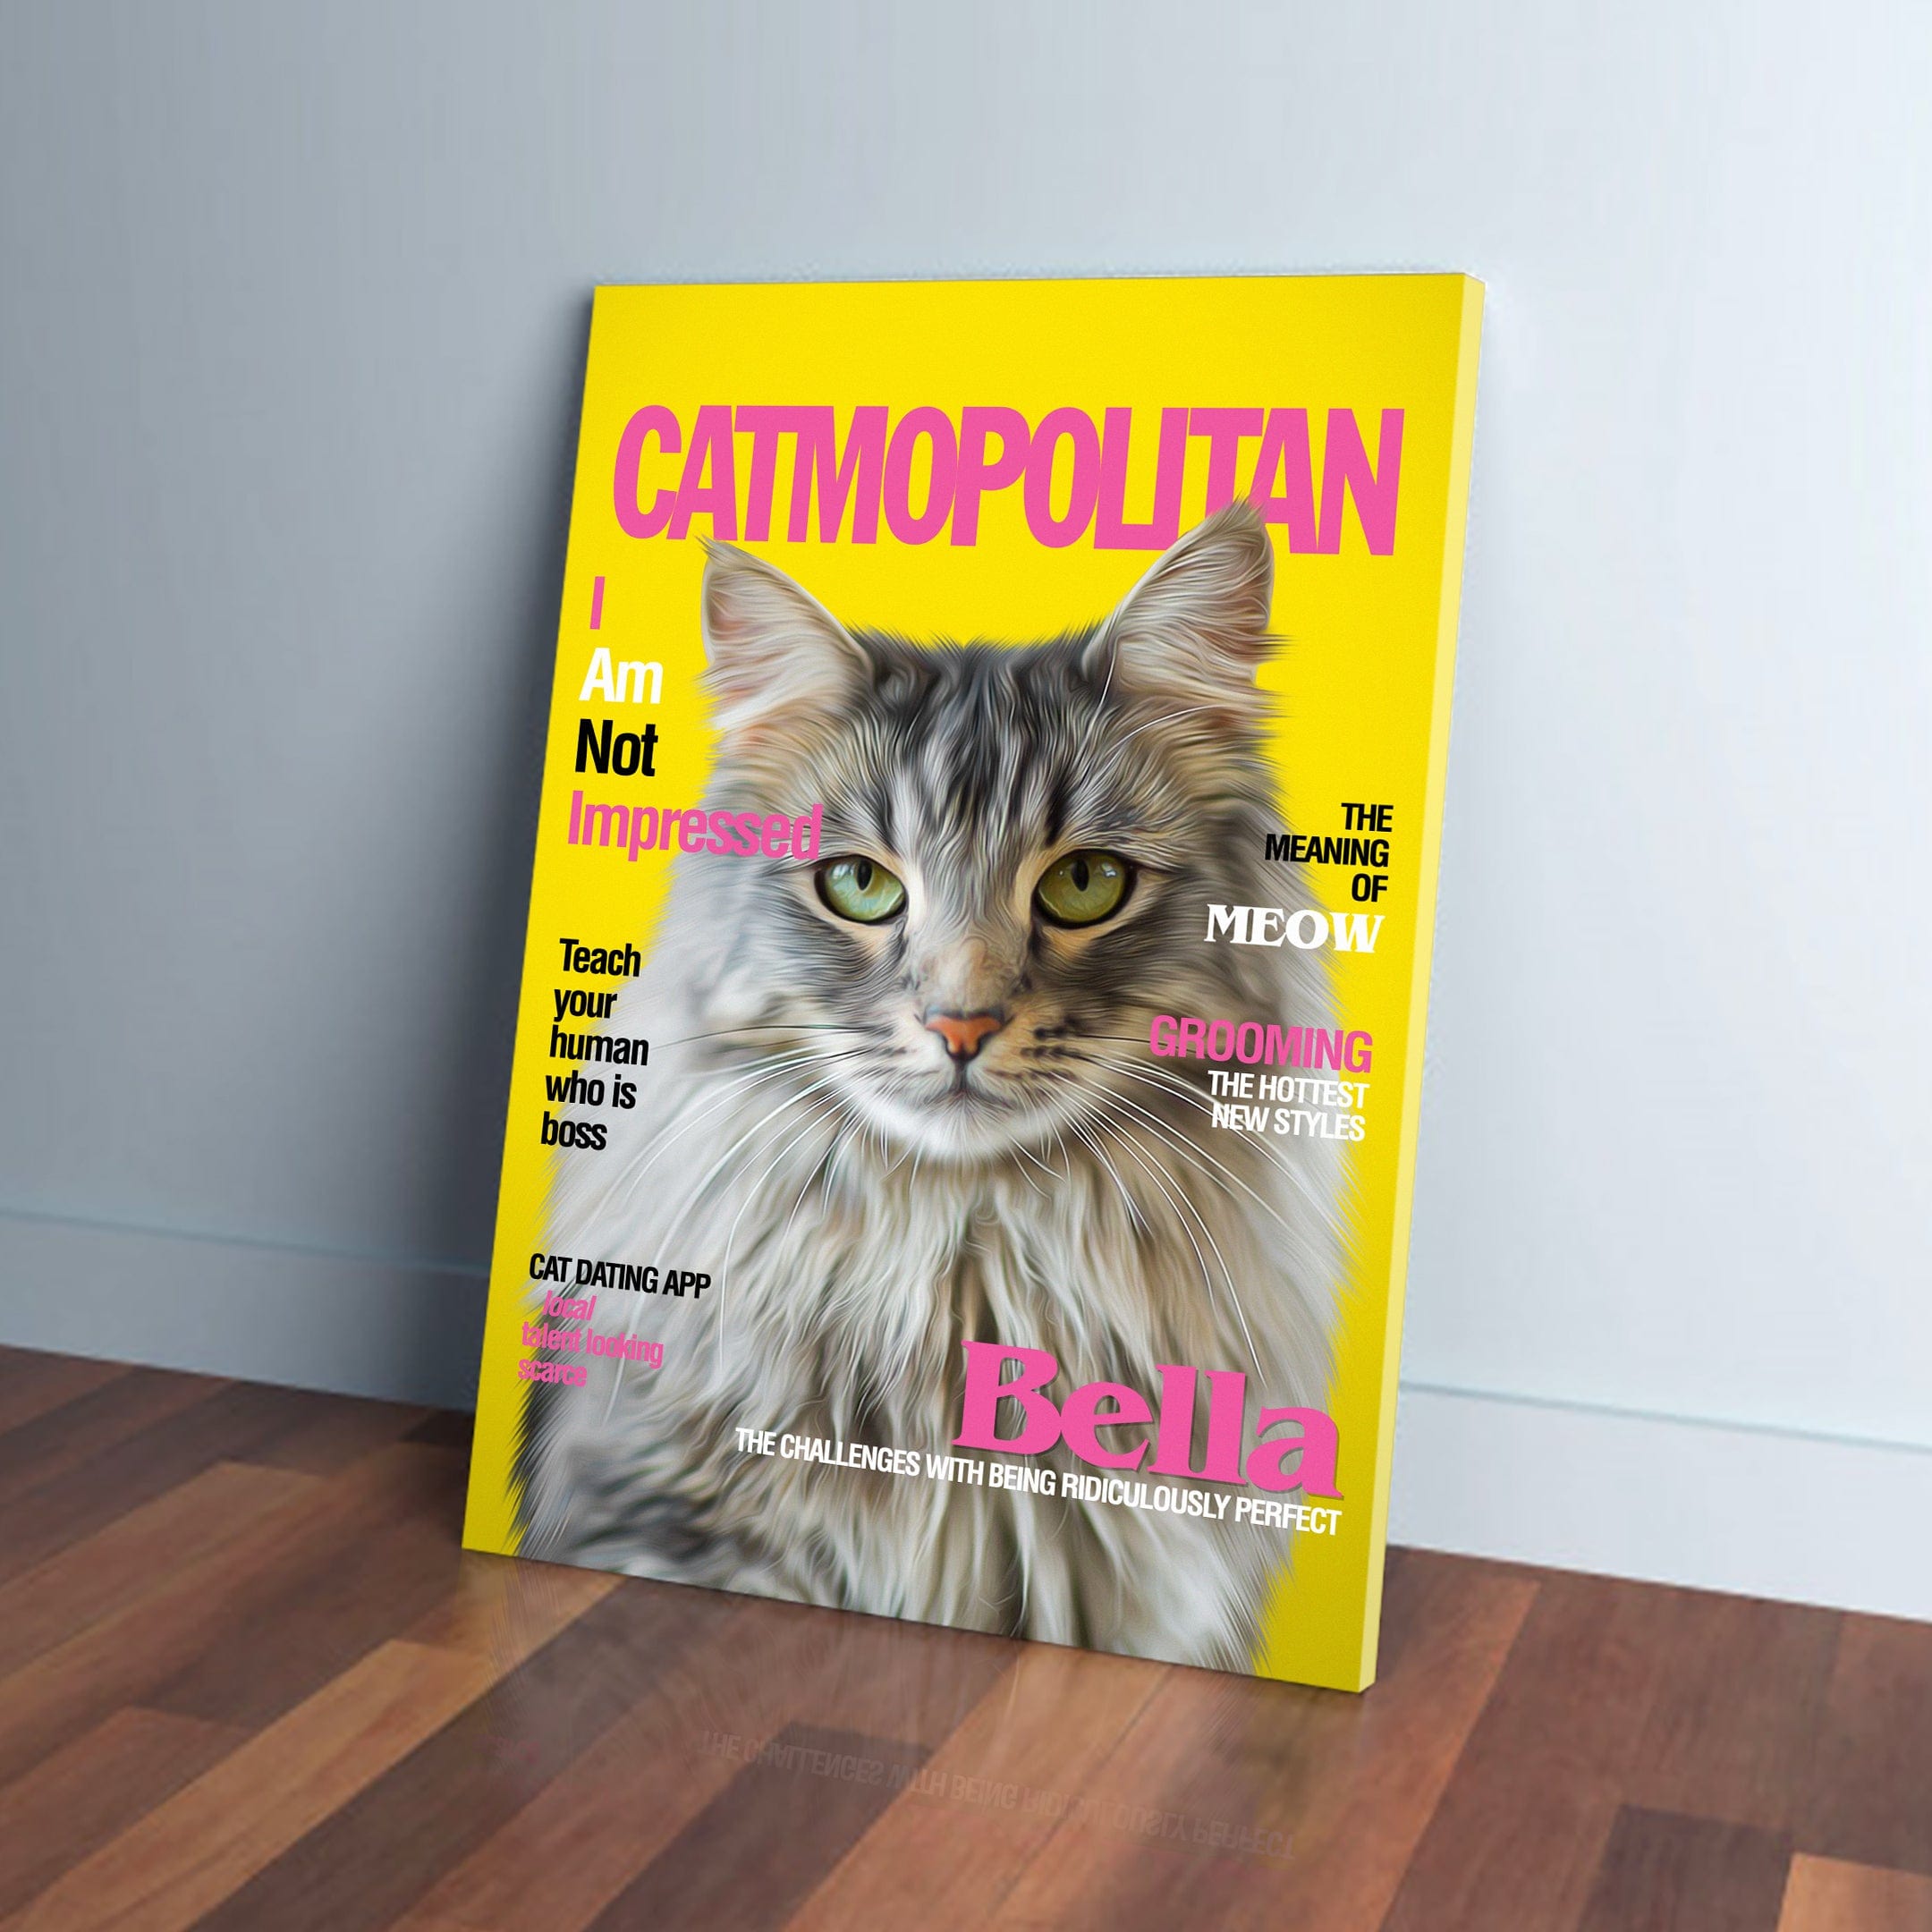 &#39;Catmopolitan&#39; Personalized Pet Canvas